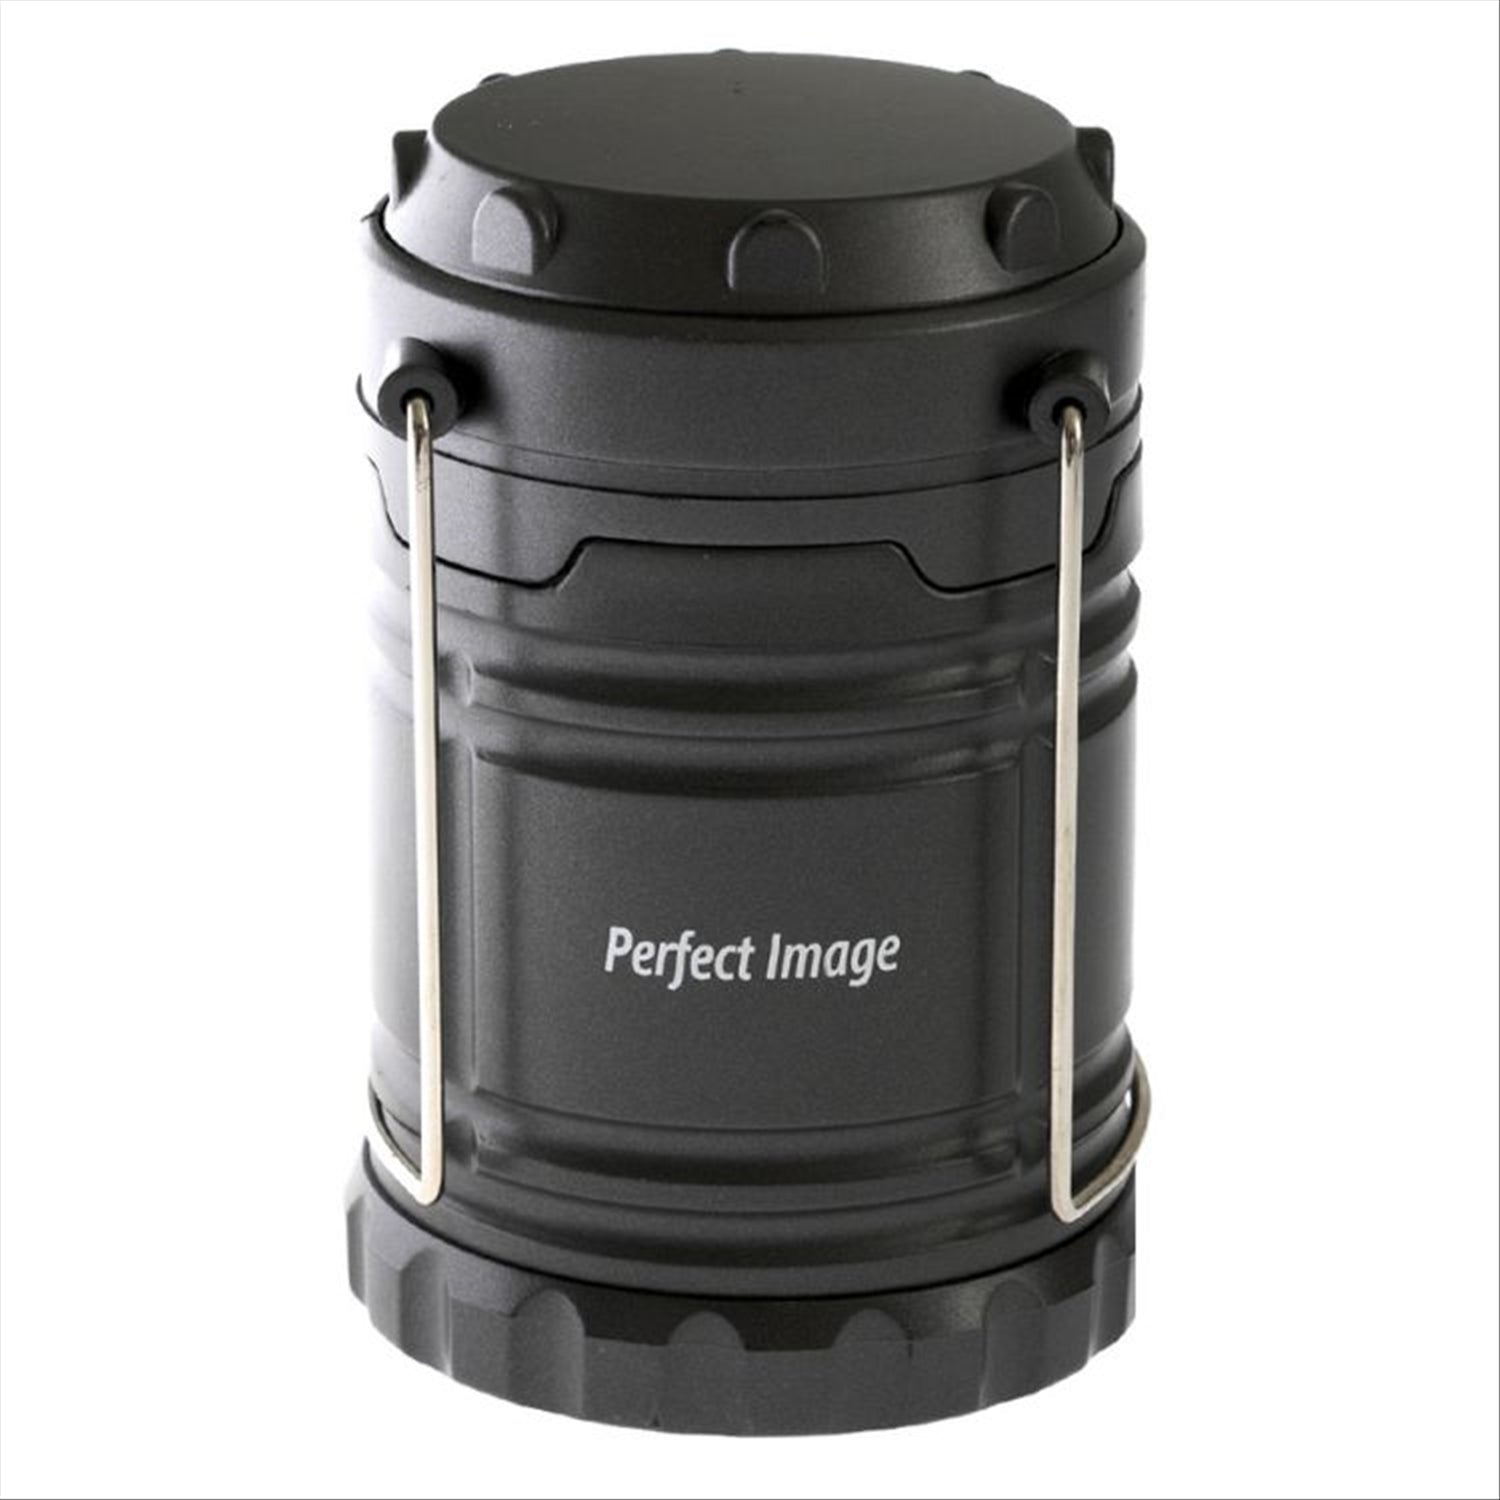 Perfect Image Cob Mini Lantern Mini - Batteries Included